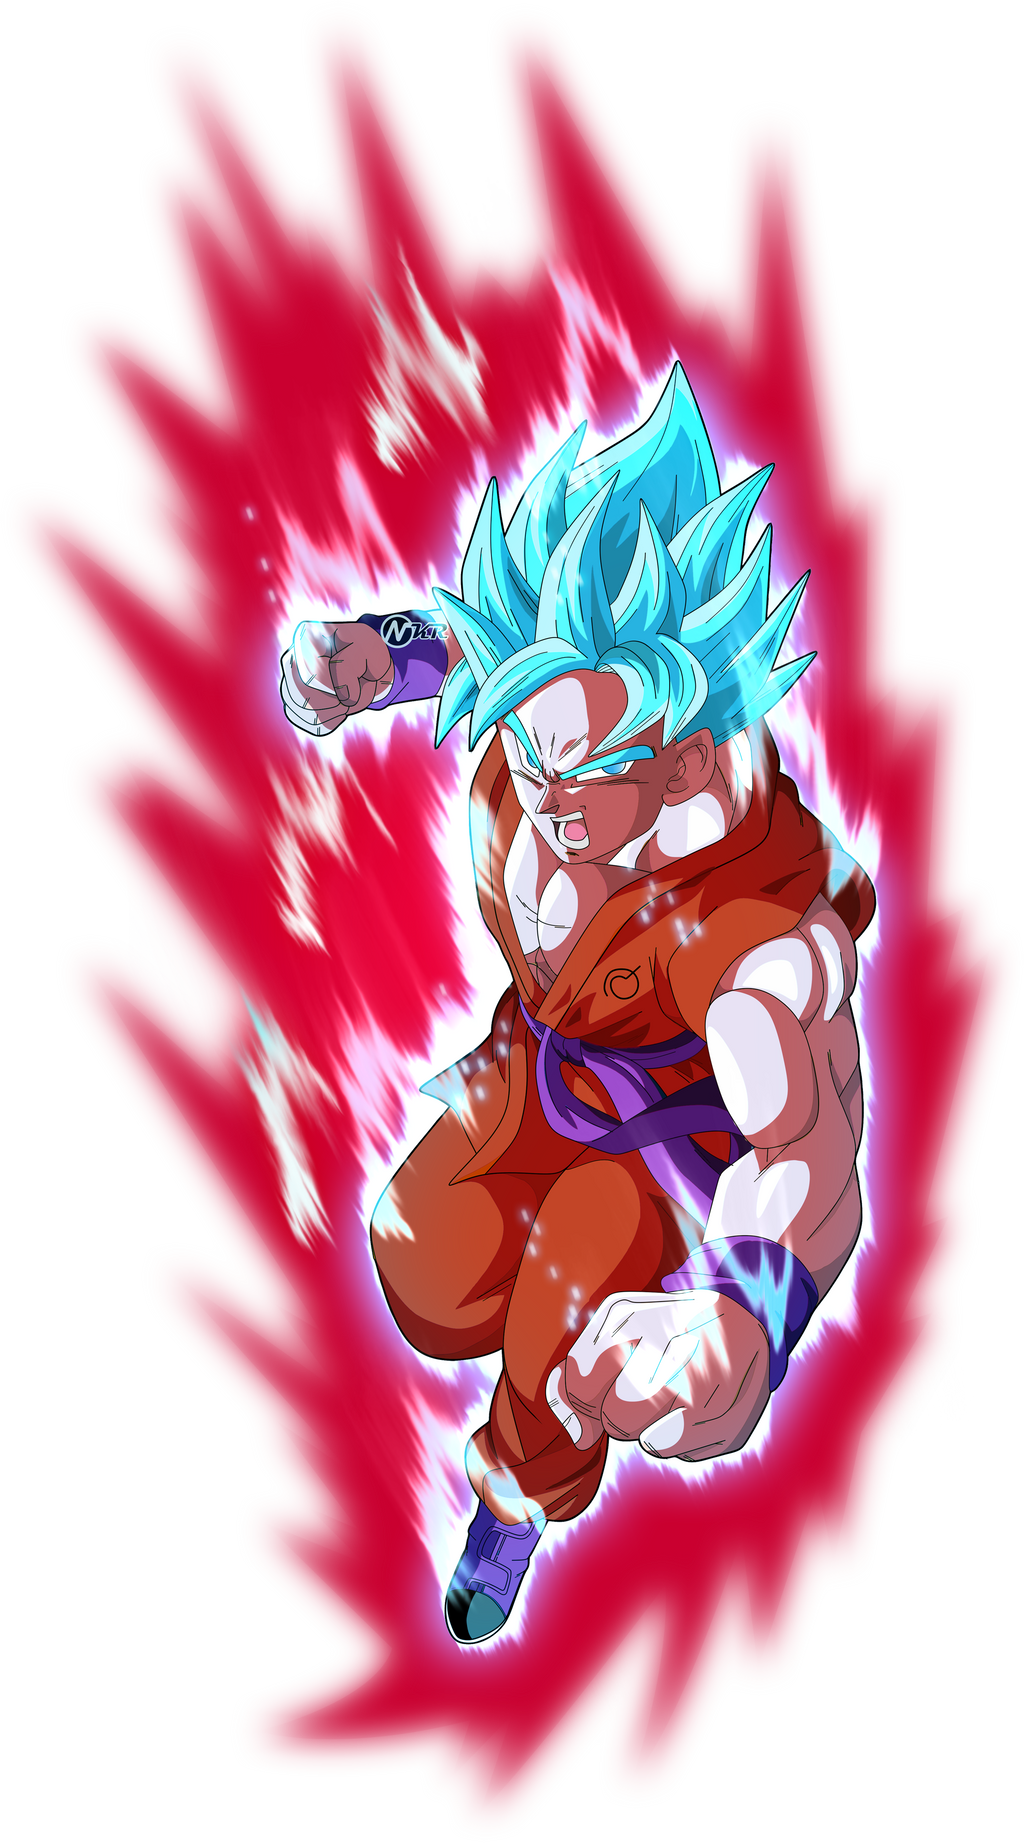 Goku Super Saiyan Blue Kaio-Ken x10 by naironkr on DeviantArt